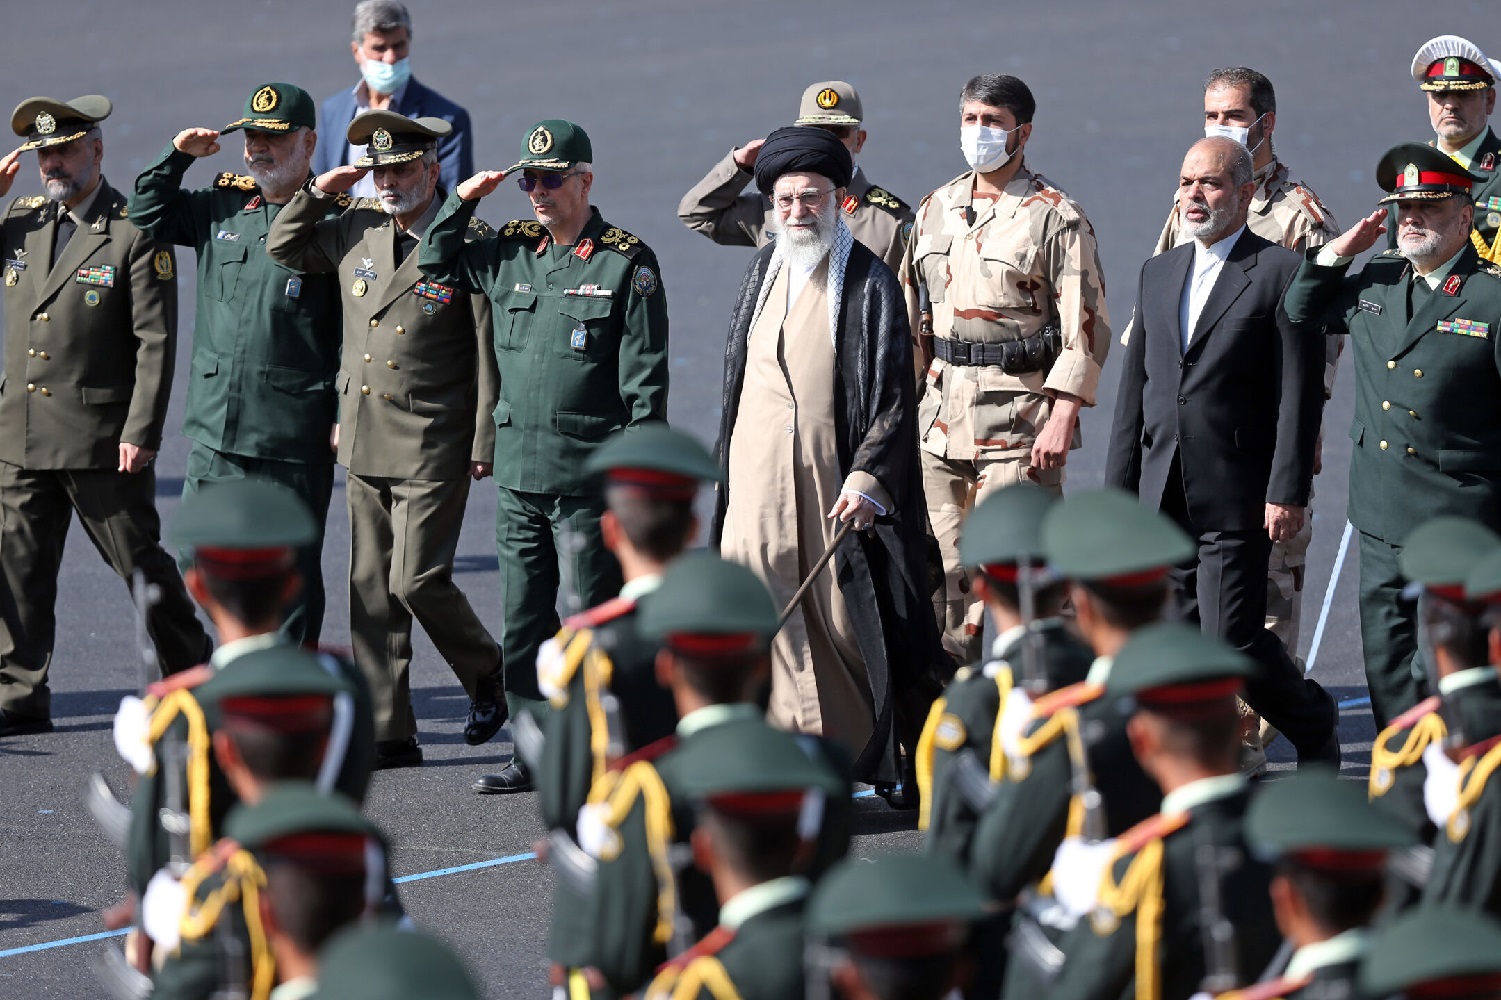 Iran’s generational leadership change